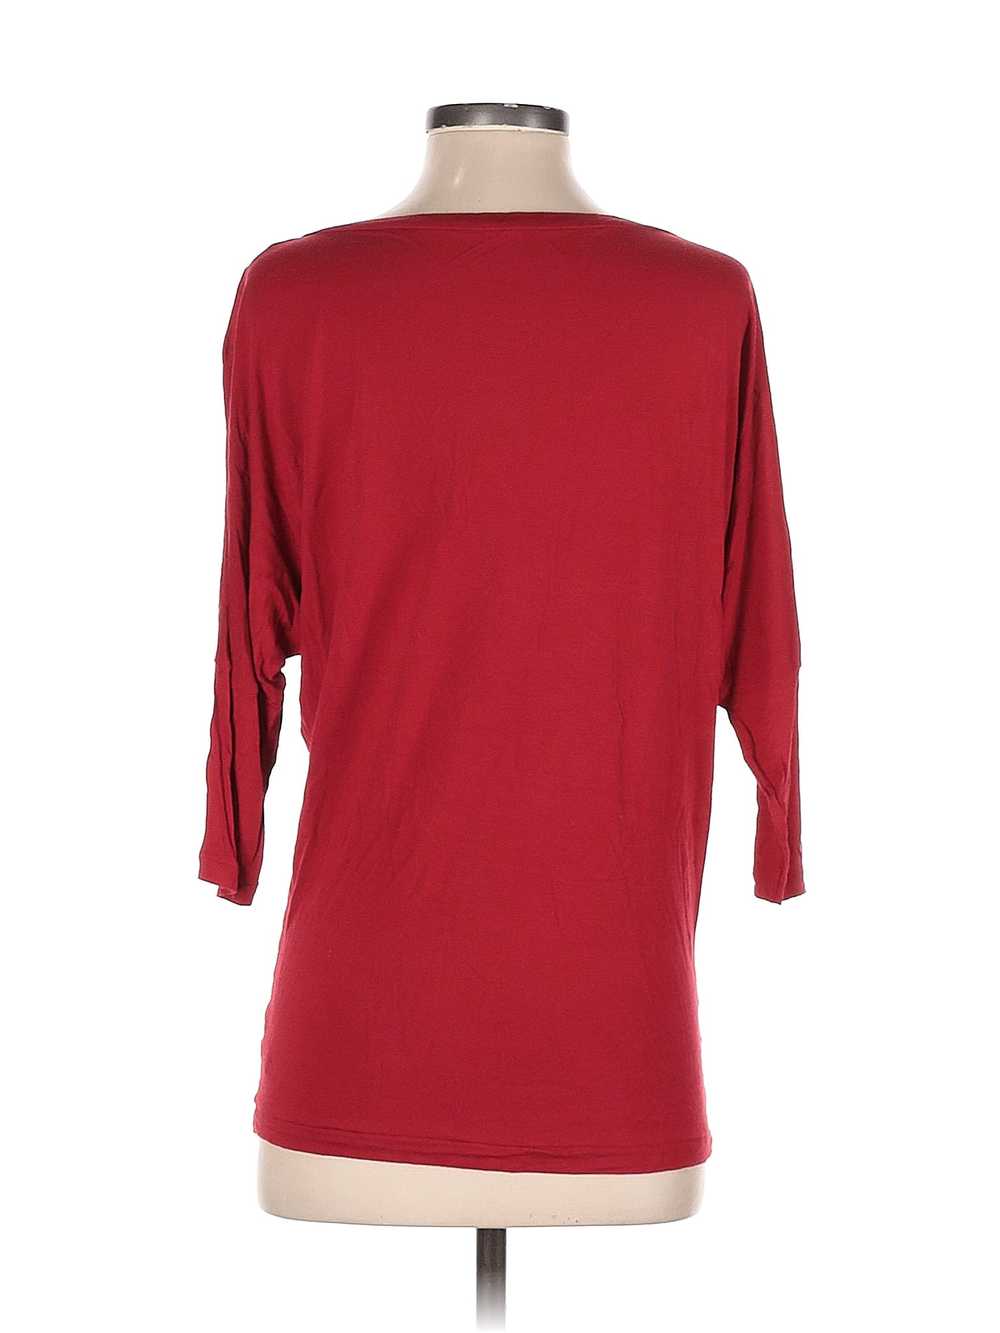 American Apparel Women Red Long Sleeve T-Shirt XS - image 2